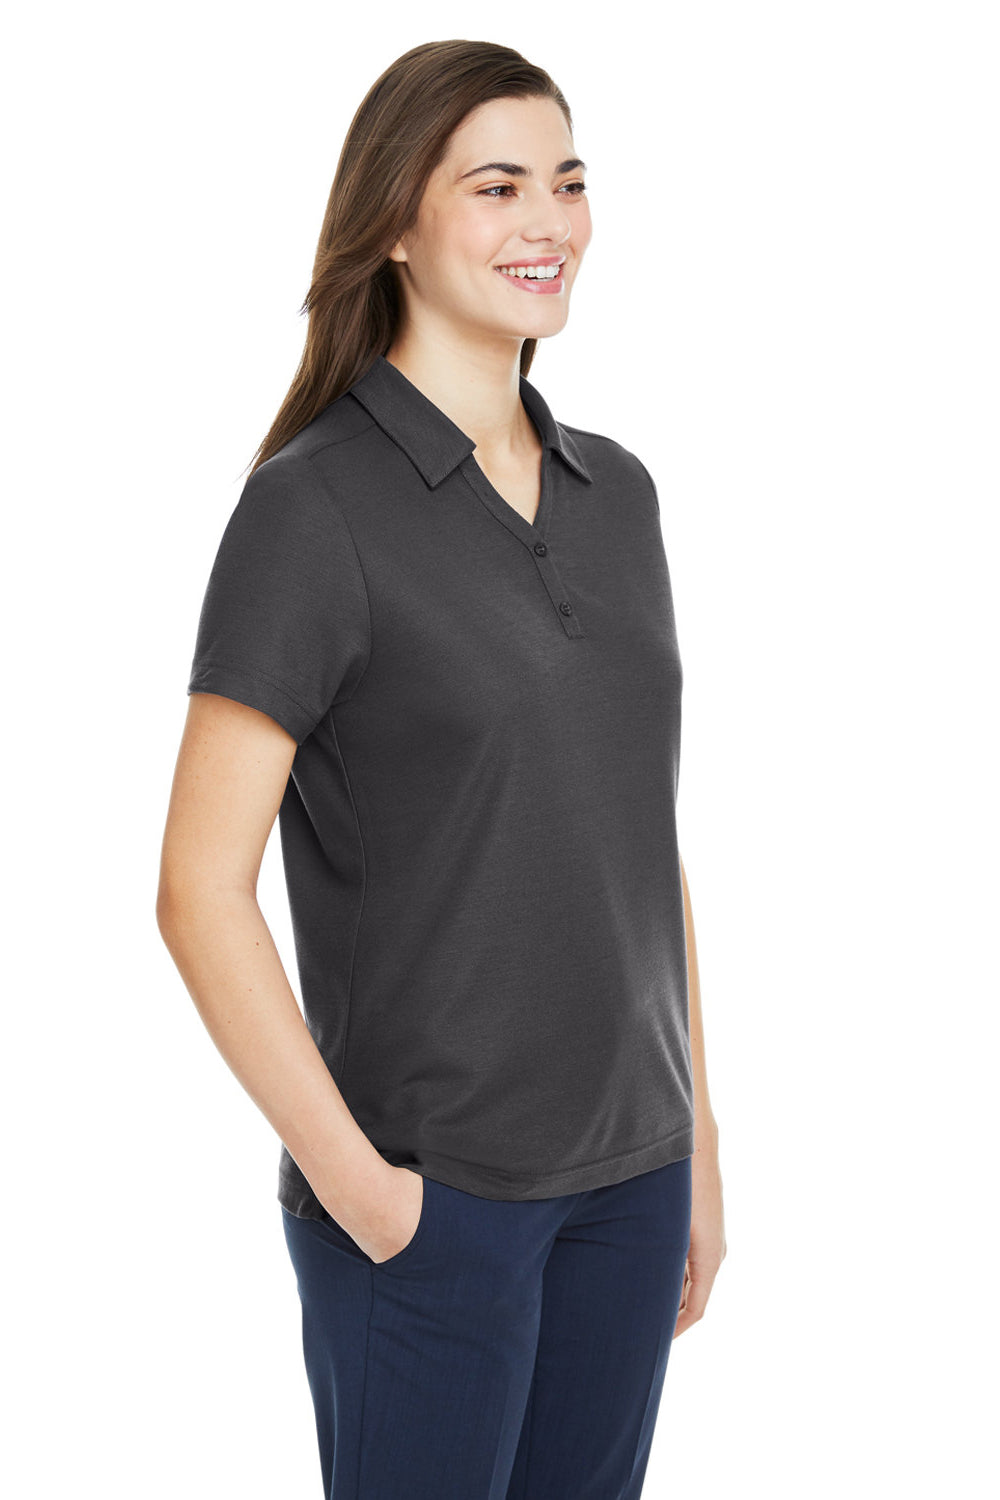 Core 365 CE112W Womens Fusion ChromaSoft Performance Moisture Wicking Pique Short Sleeve Polo Shirt Carbon Grey 3Q